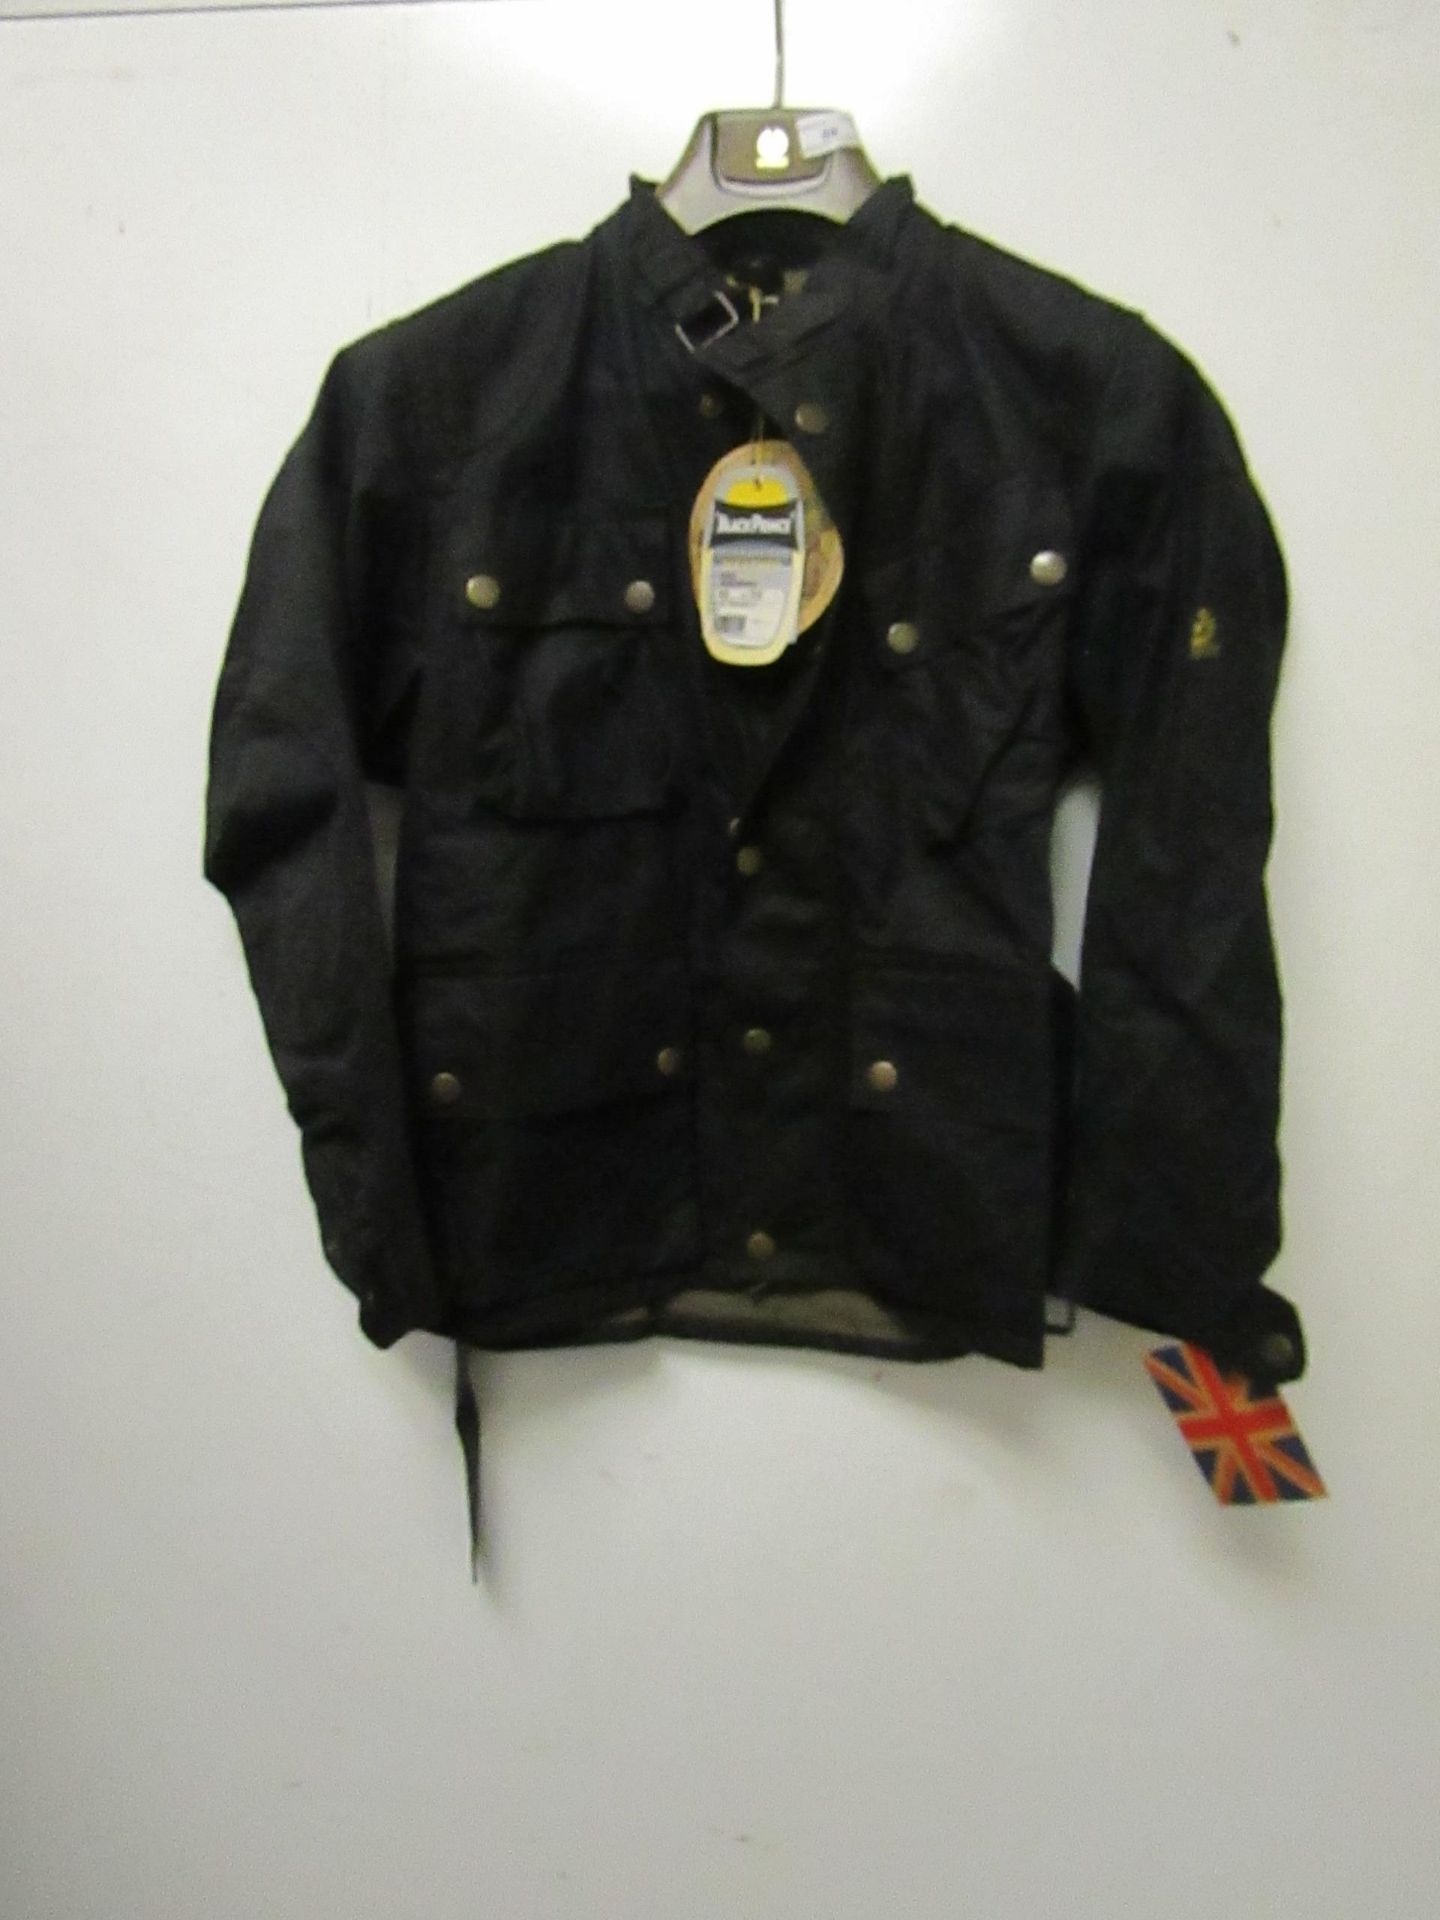 Ralph Lauren fleece jacket, size XL, with tags.